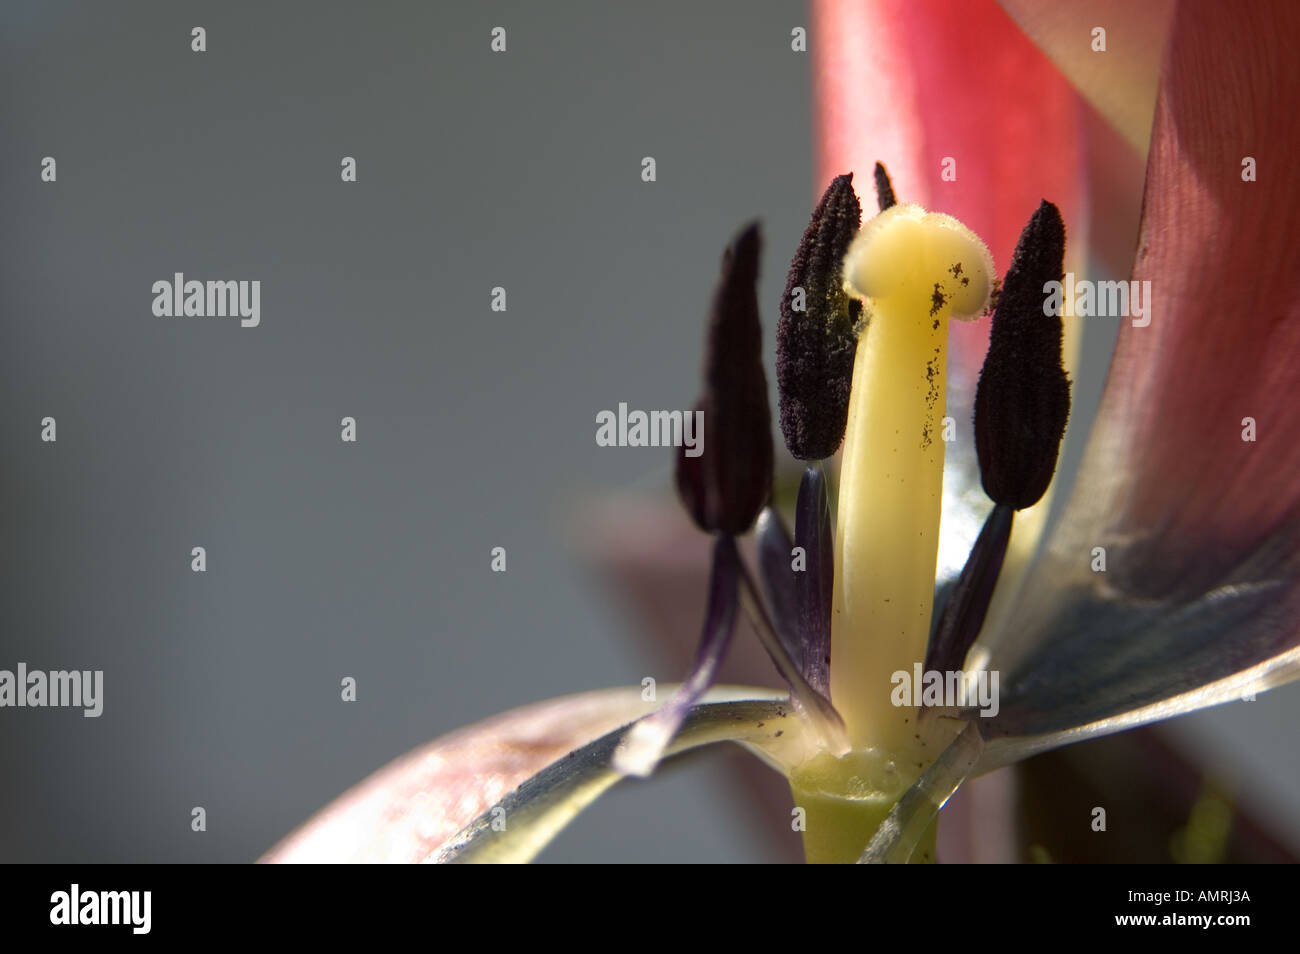 Stempel Fruchtblatt einer Tulpenblüte mit Griffel Narbe und Staubblatt Staubbeutel carpelo pistilo de un tulipán con estilo estigma Foto de stock